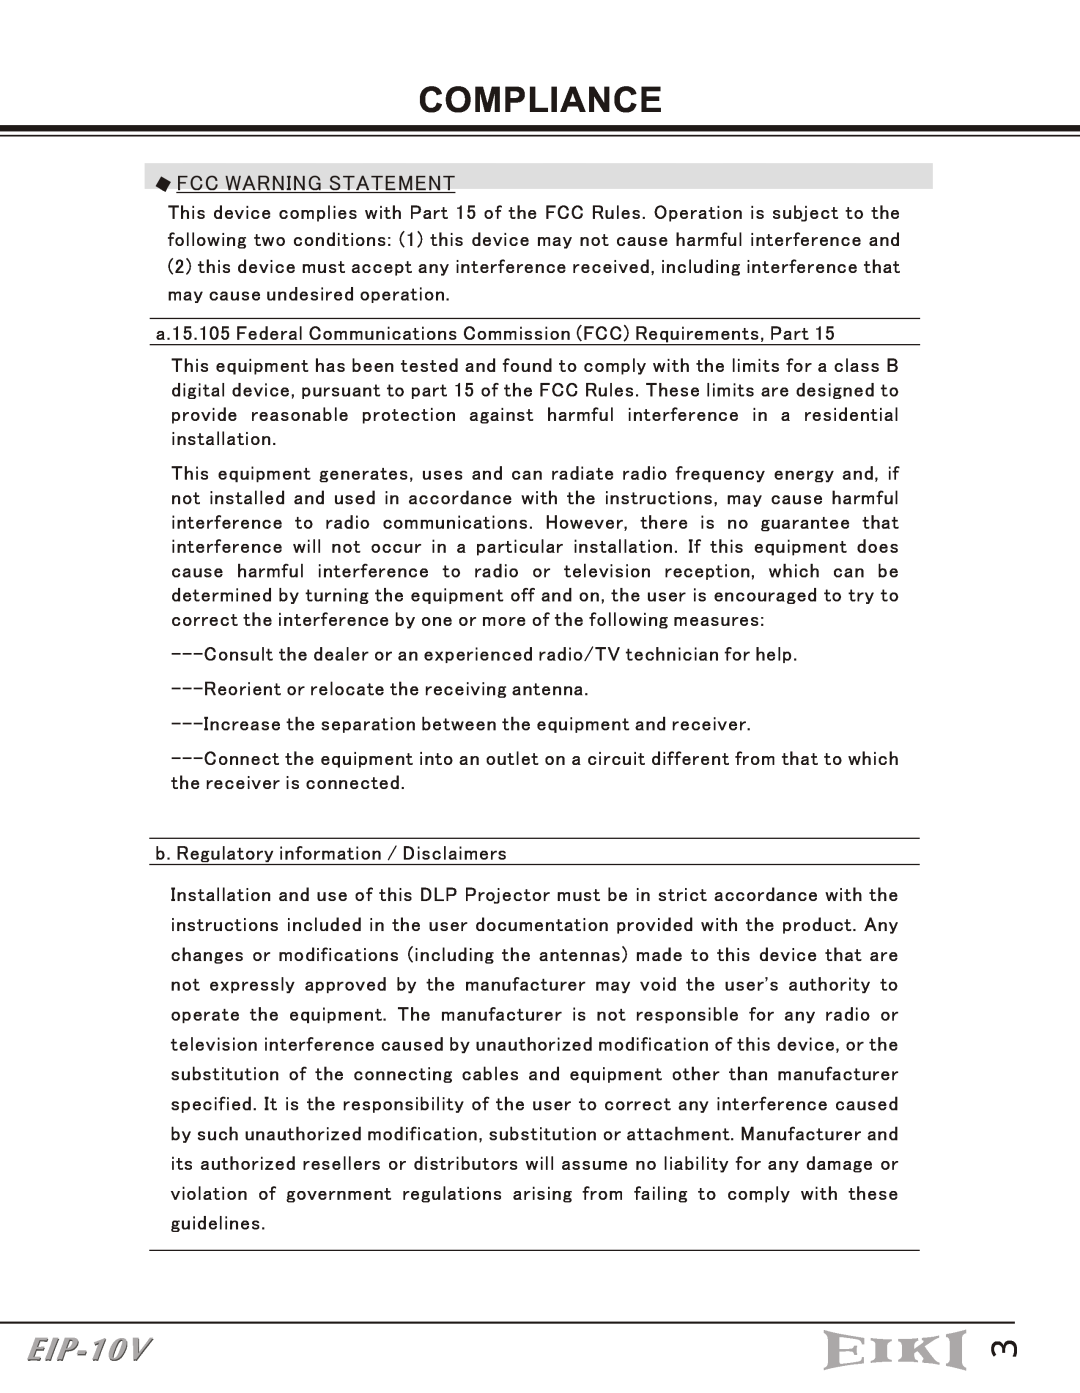 Eiki EIP-10V owner manual Compliance, Fcc Warning Statement 